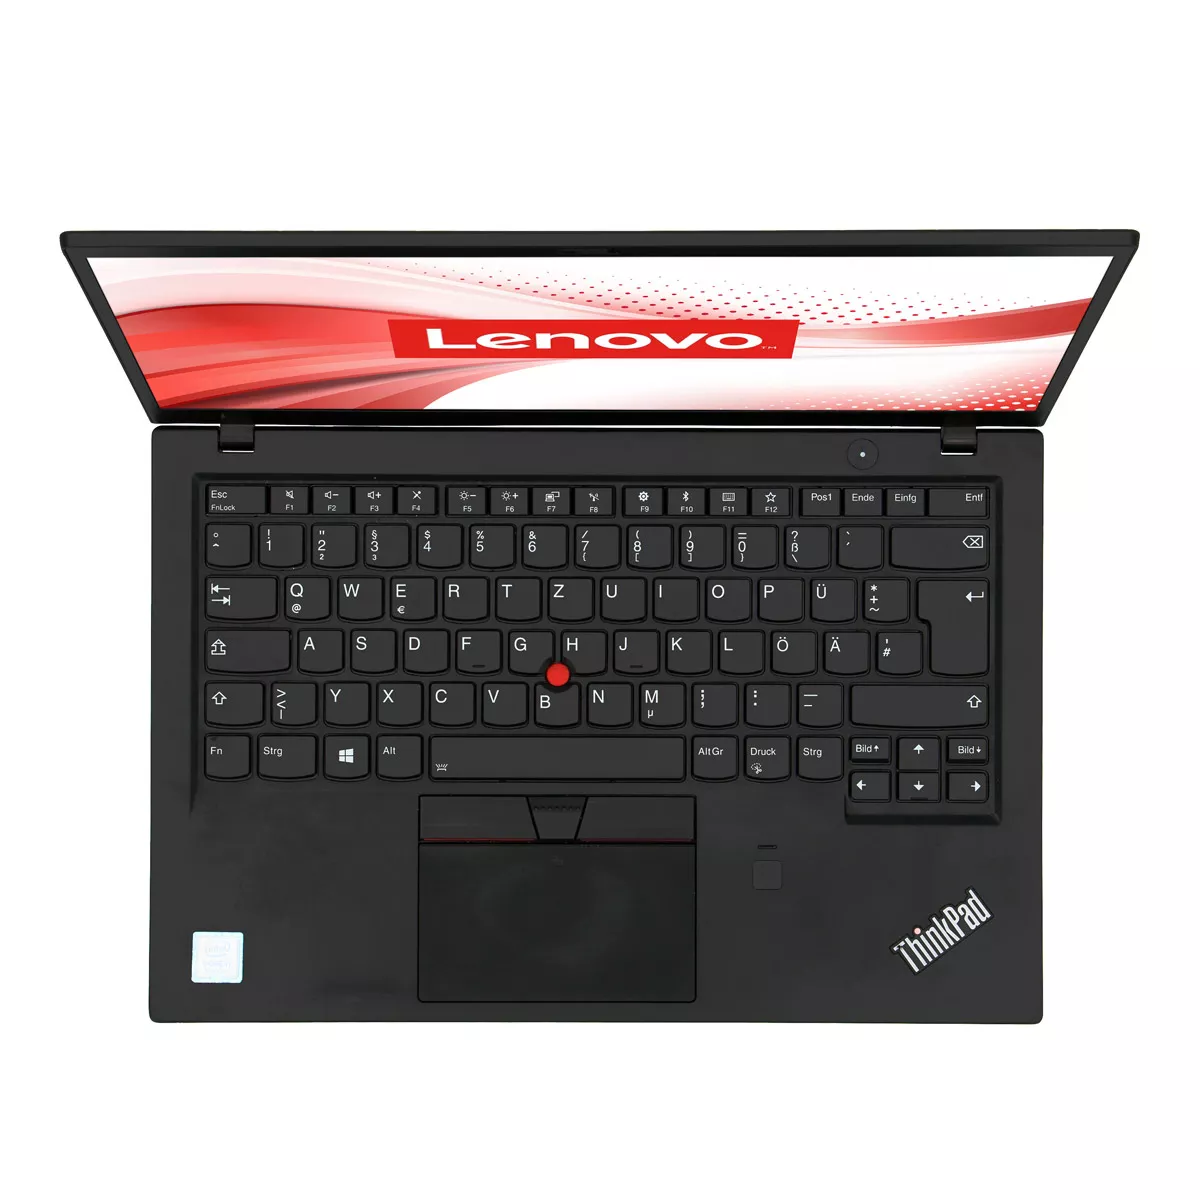 Lenovo ThinkPad X1 Carbon G7 Core i7 8565U Full-HD 16 GB 500 GB M.2 nVME SSD LTE Webcam B